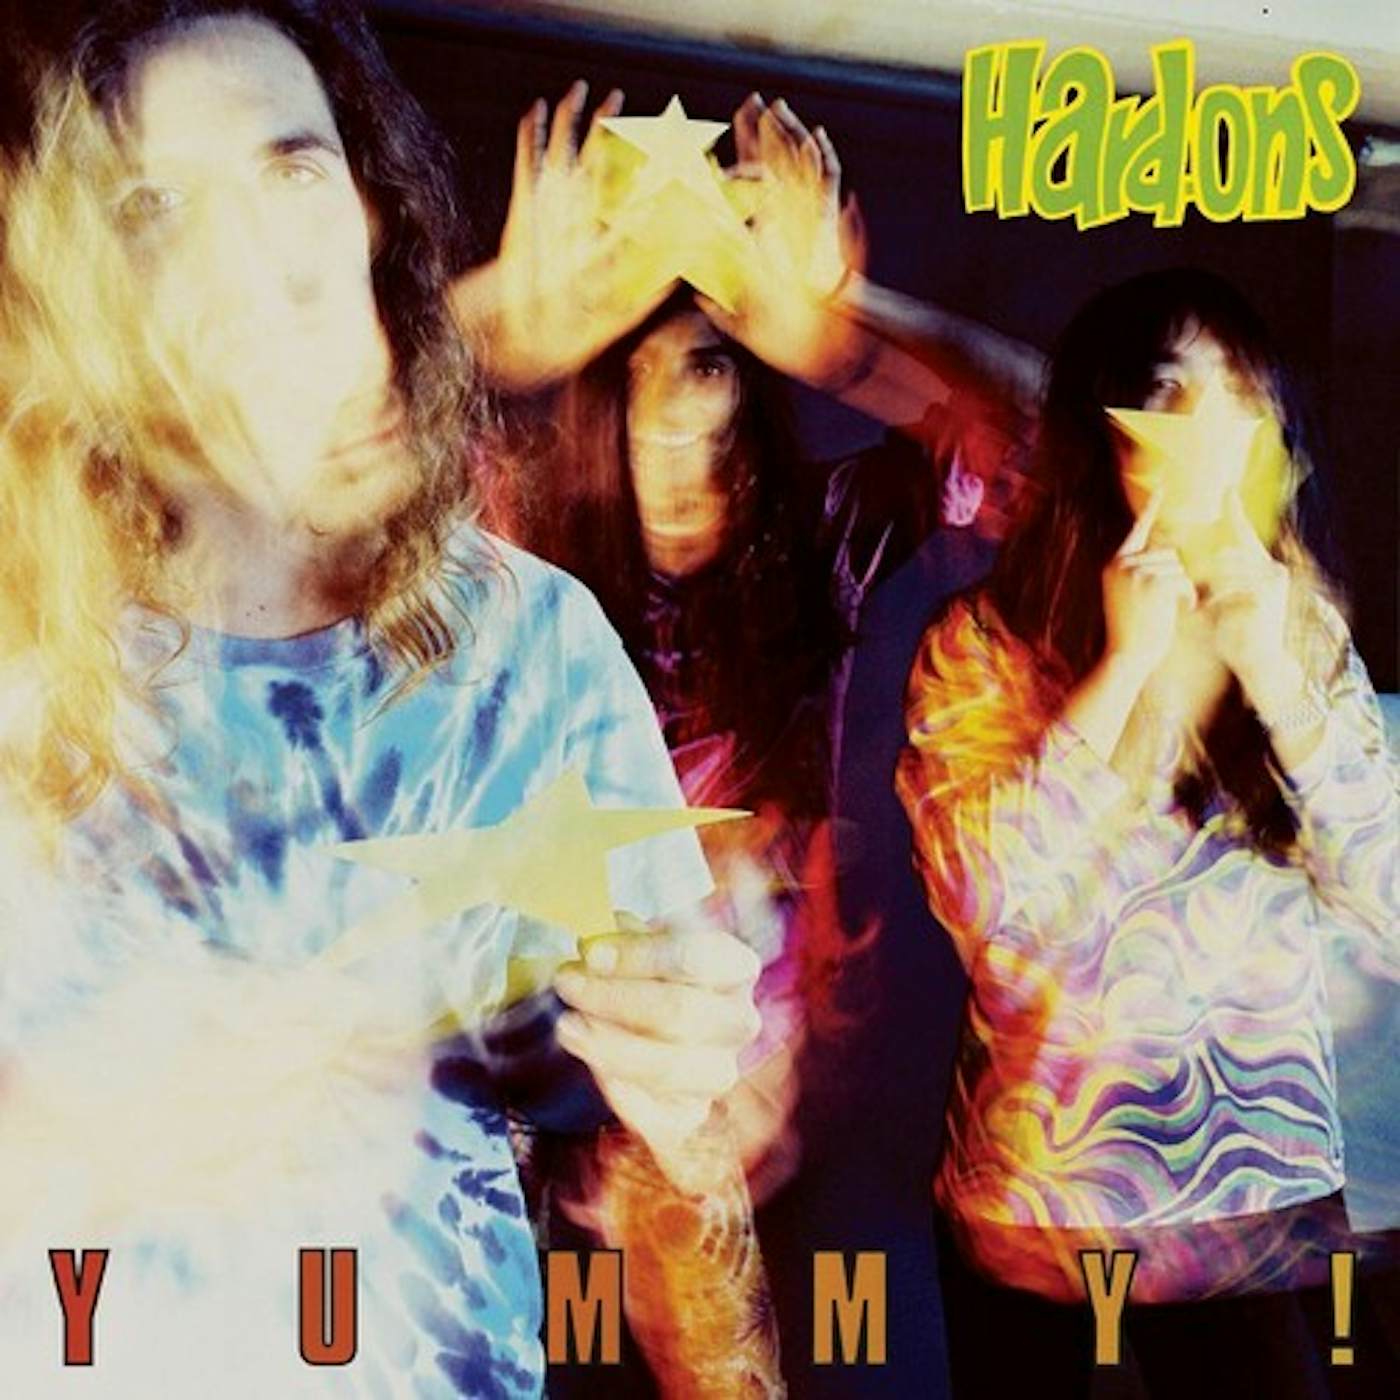 Hard-Ons YUMMY Vinyl Record